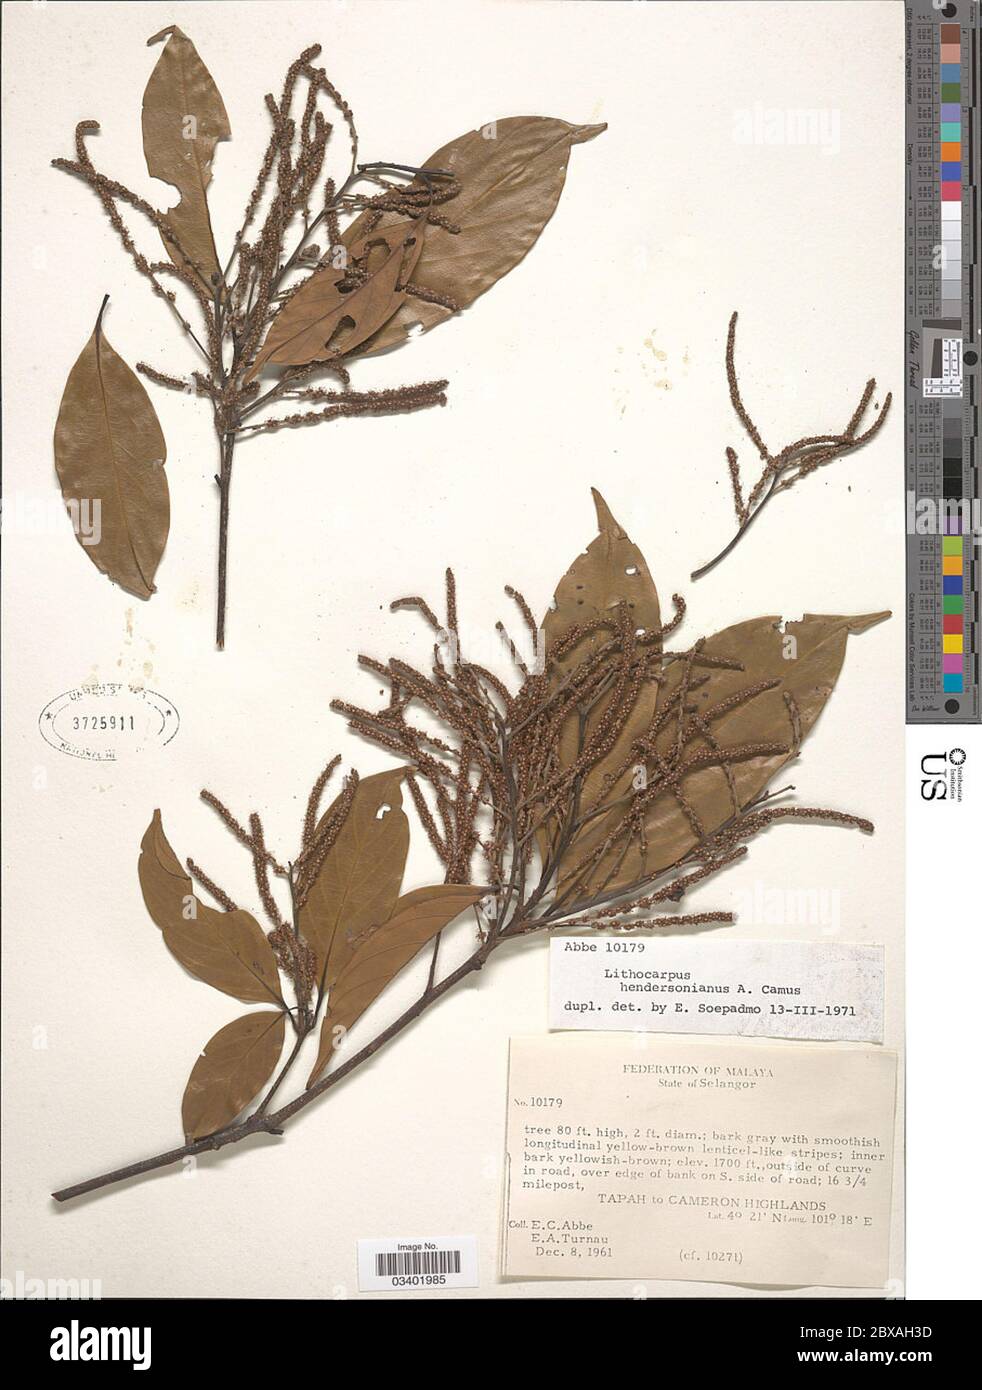 Lithocarpus hendersonianus A Camus Lithocarpus hendersonianus A Camus. Stock Photo